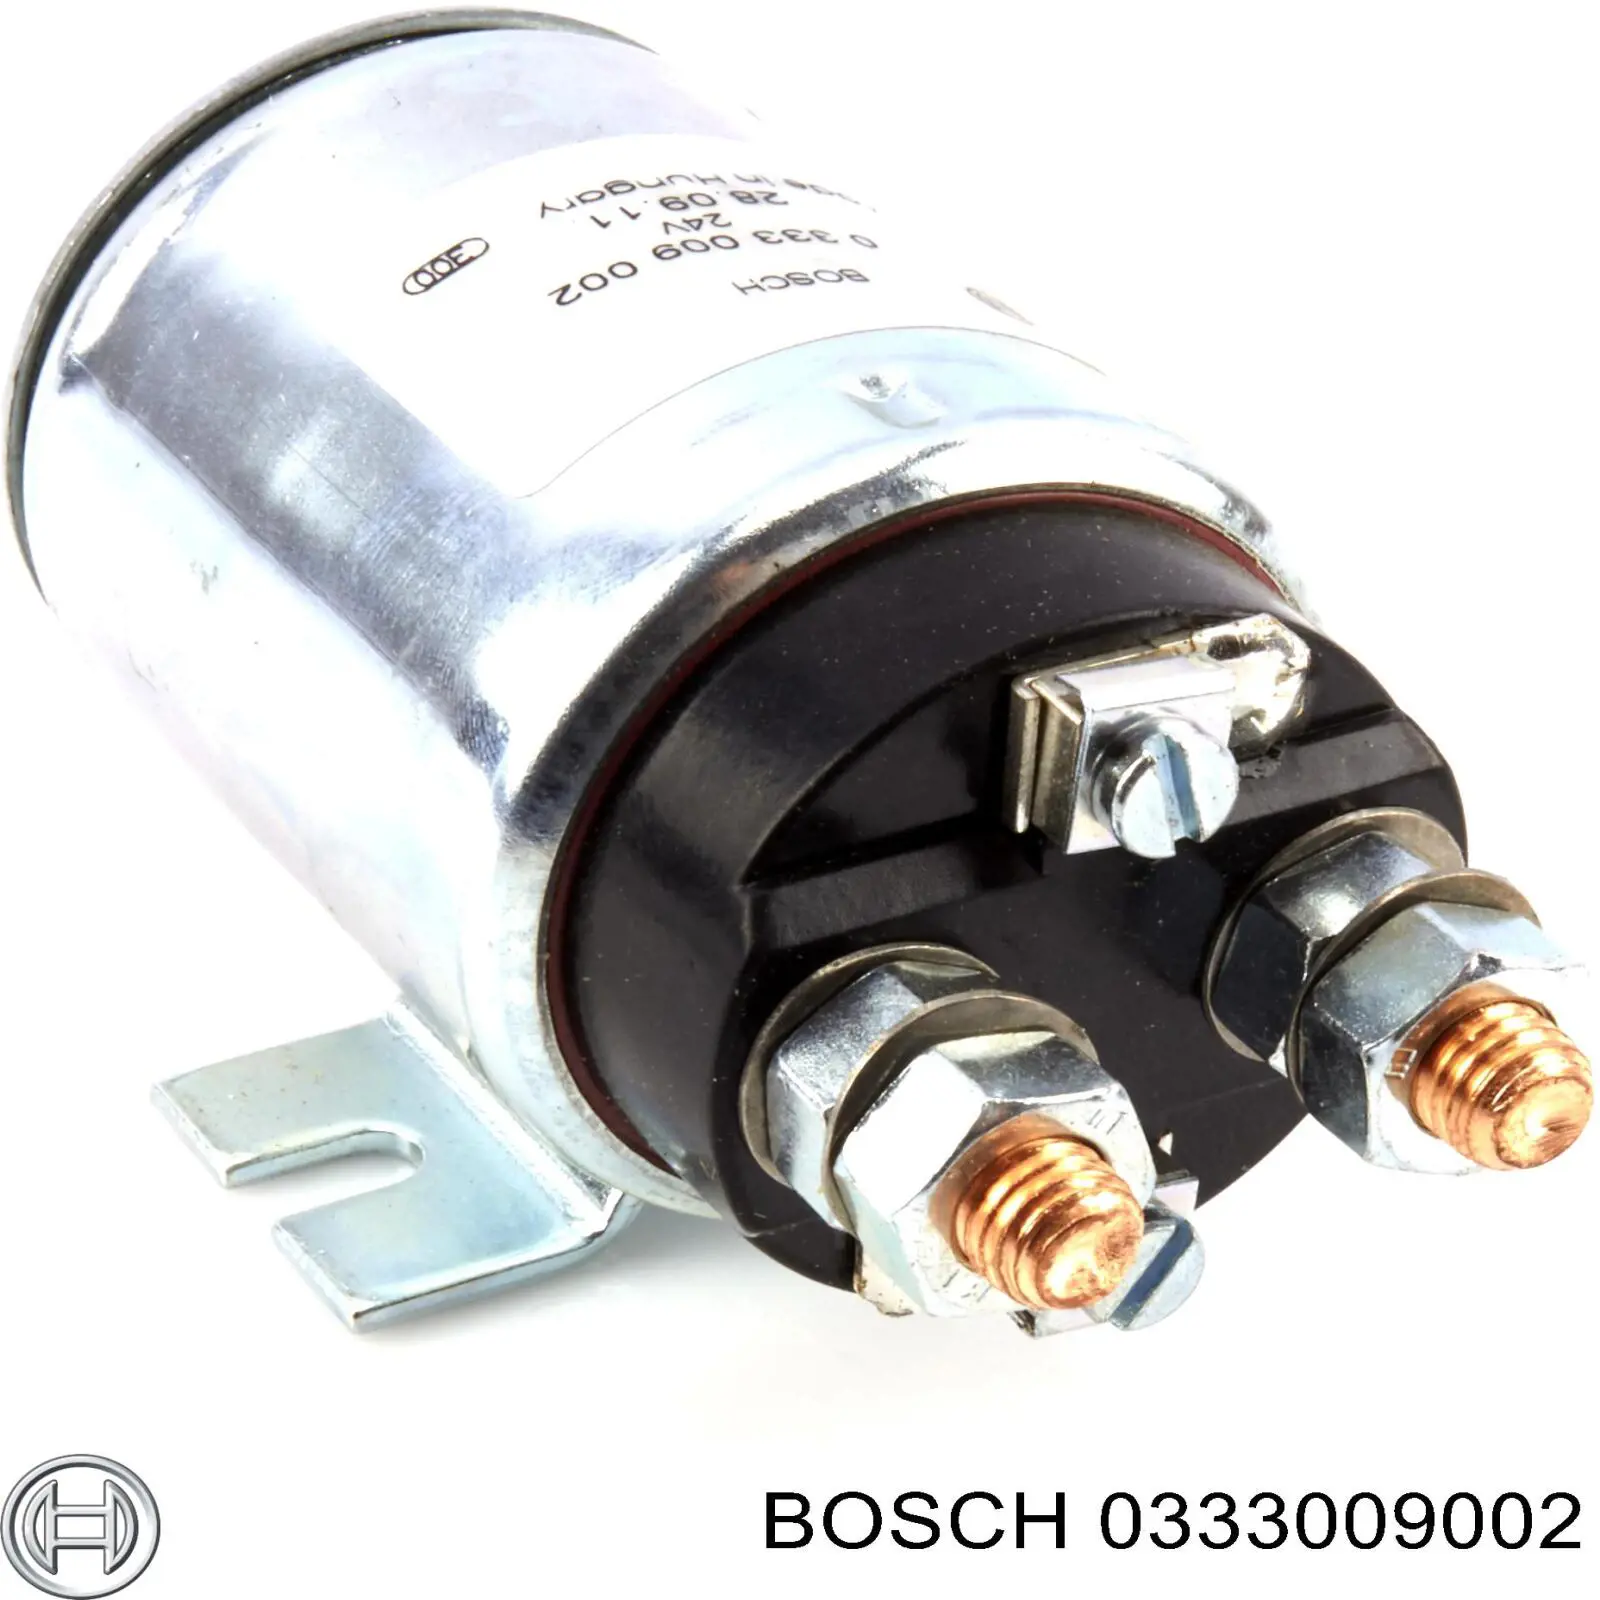 Interruptor magnético, estárter Bosch 0333009002